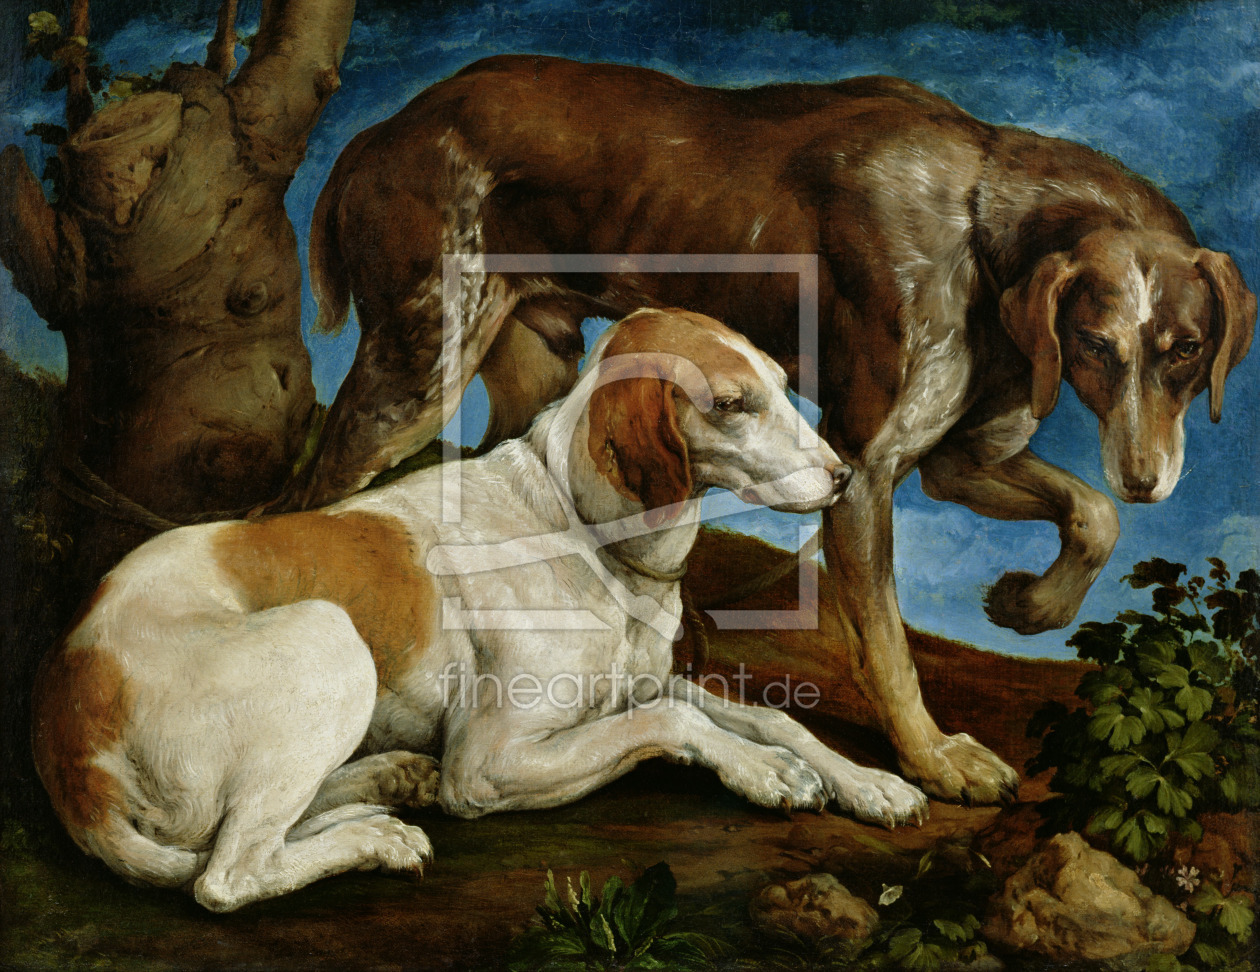 Bild-Nr.: 31002557 Two Hunting Dogs Tied to a Tree Stump, c.1548-50 erstellt von Bassano, Jacopo (Jacopo da Ponte)